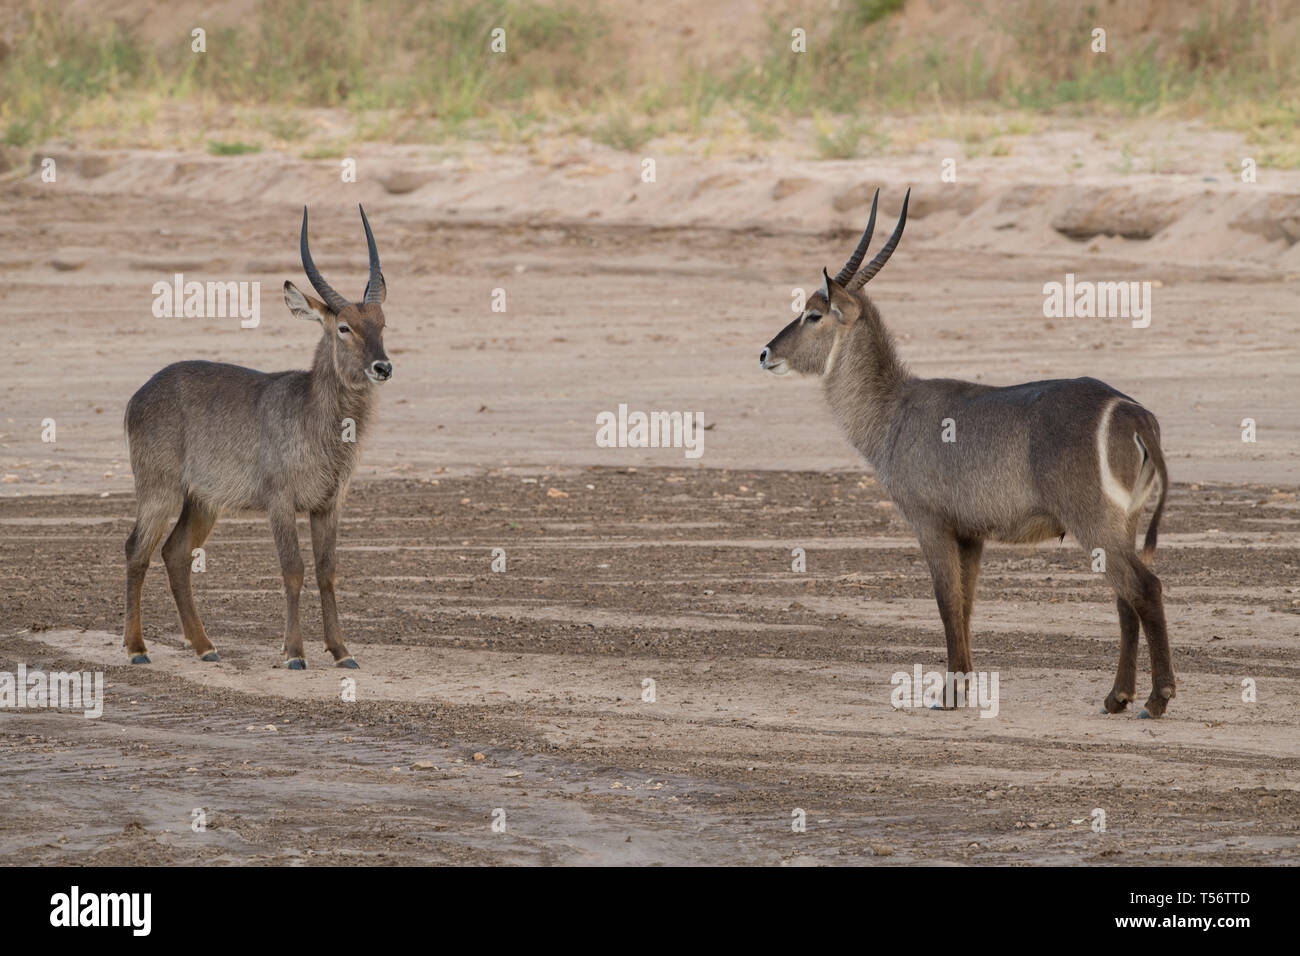 Two waterbucks standing together, Tarangire National Park, Tanzania Stock Photo